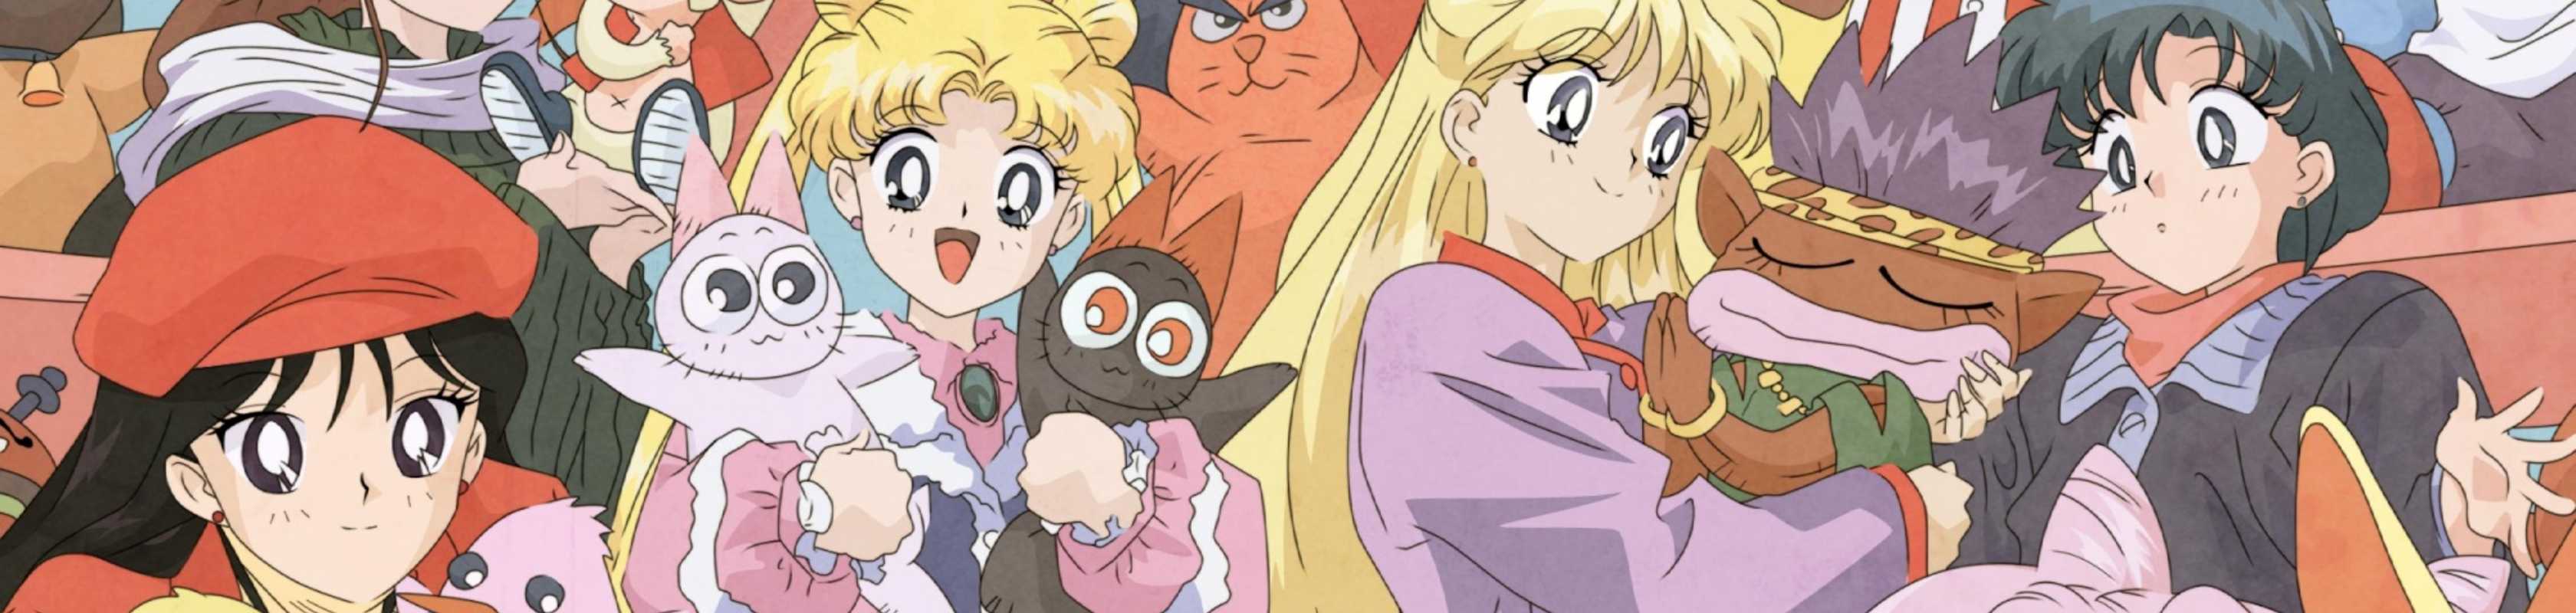 Bishoujo Senshi Sailor Moon S: Kaguya Hime no Koibito cover